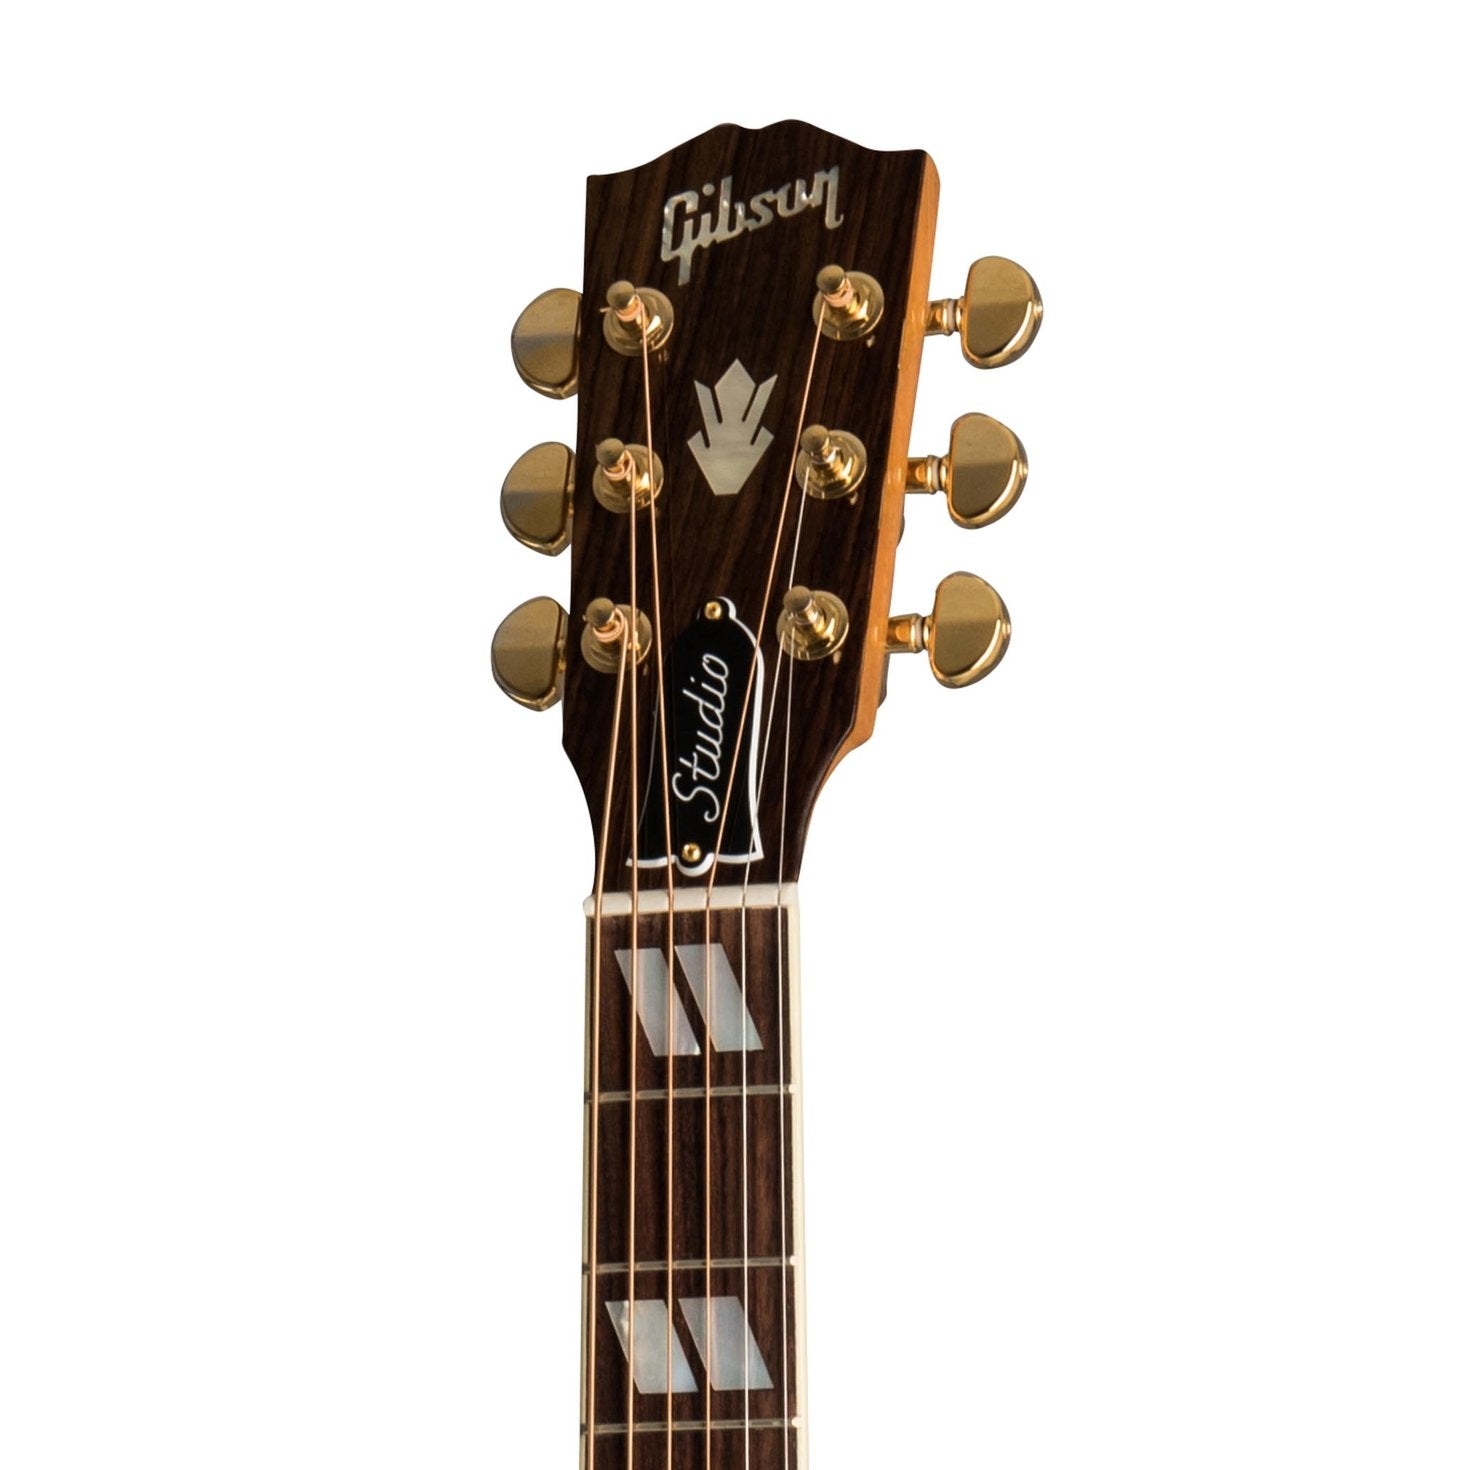 Gibson Montana 2019 Songwriter Cutaway Acoustic Guitar, Antique Natural, GIBSON, ACOUSTIC GUITAR, gibson-acoustic-guitar-g06-ssscang19, ZOSO MUSIC SDN BHD